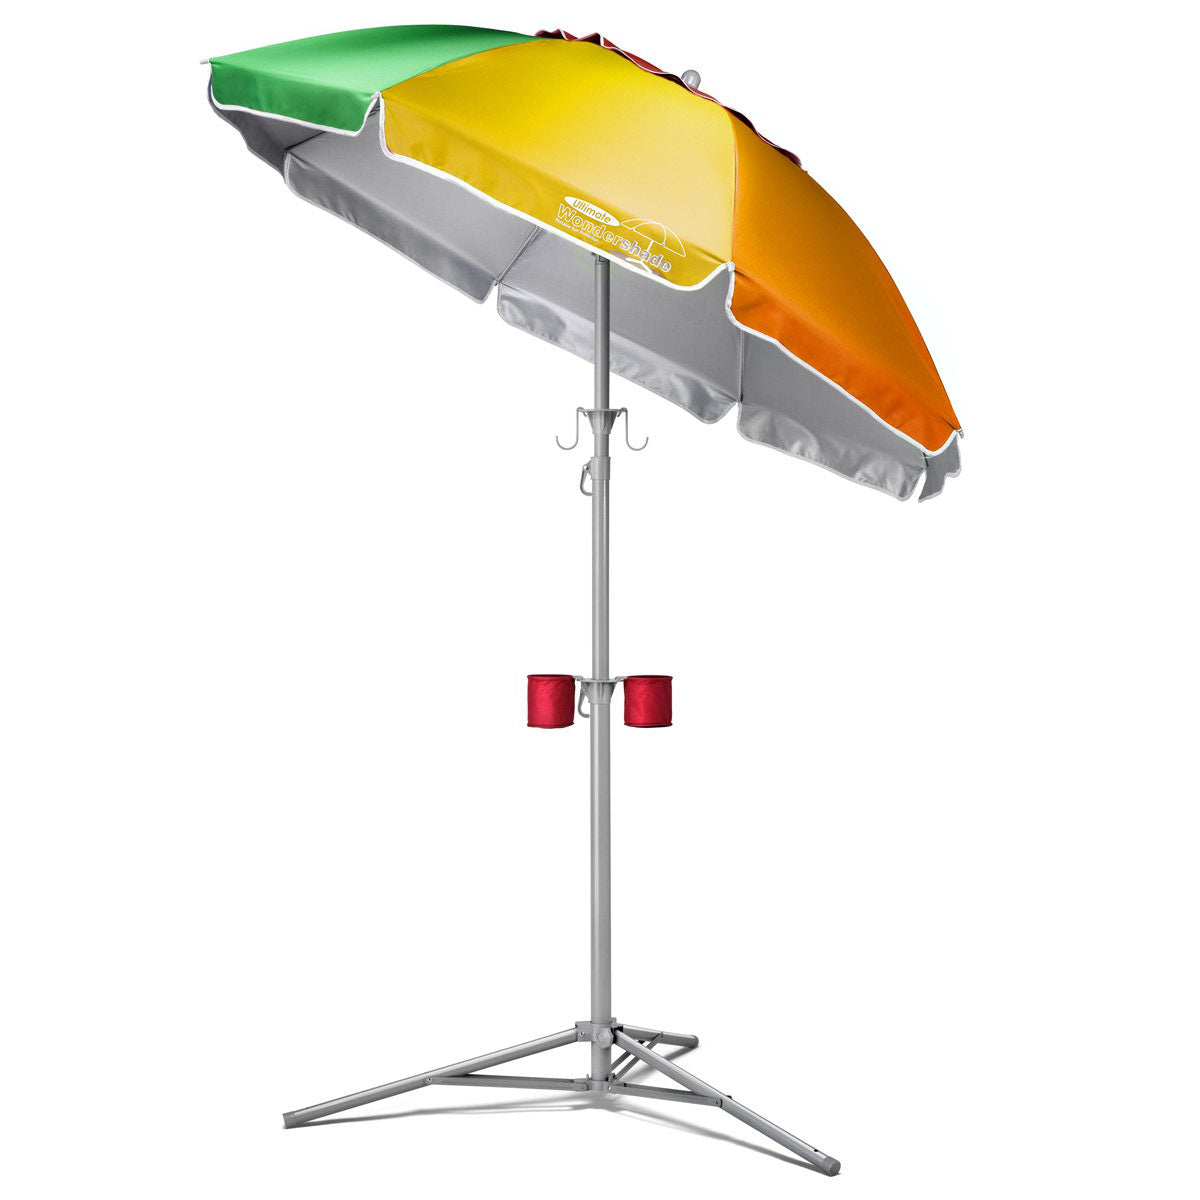 Shade　Umbrella　Ultimate　Rainbow　Wondershade,　Portable